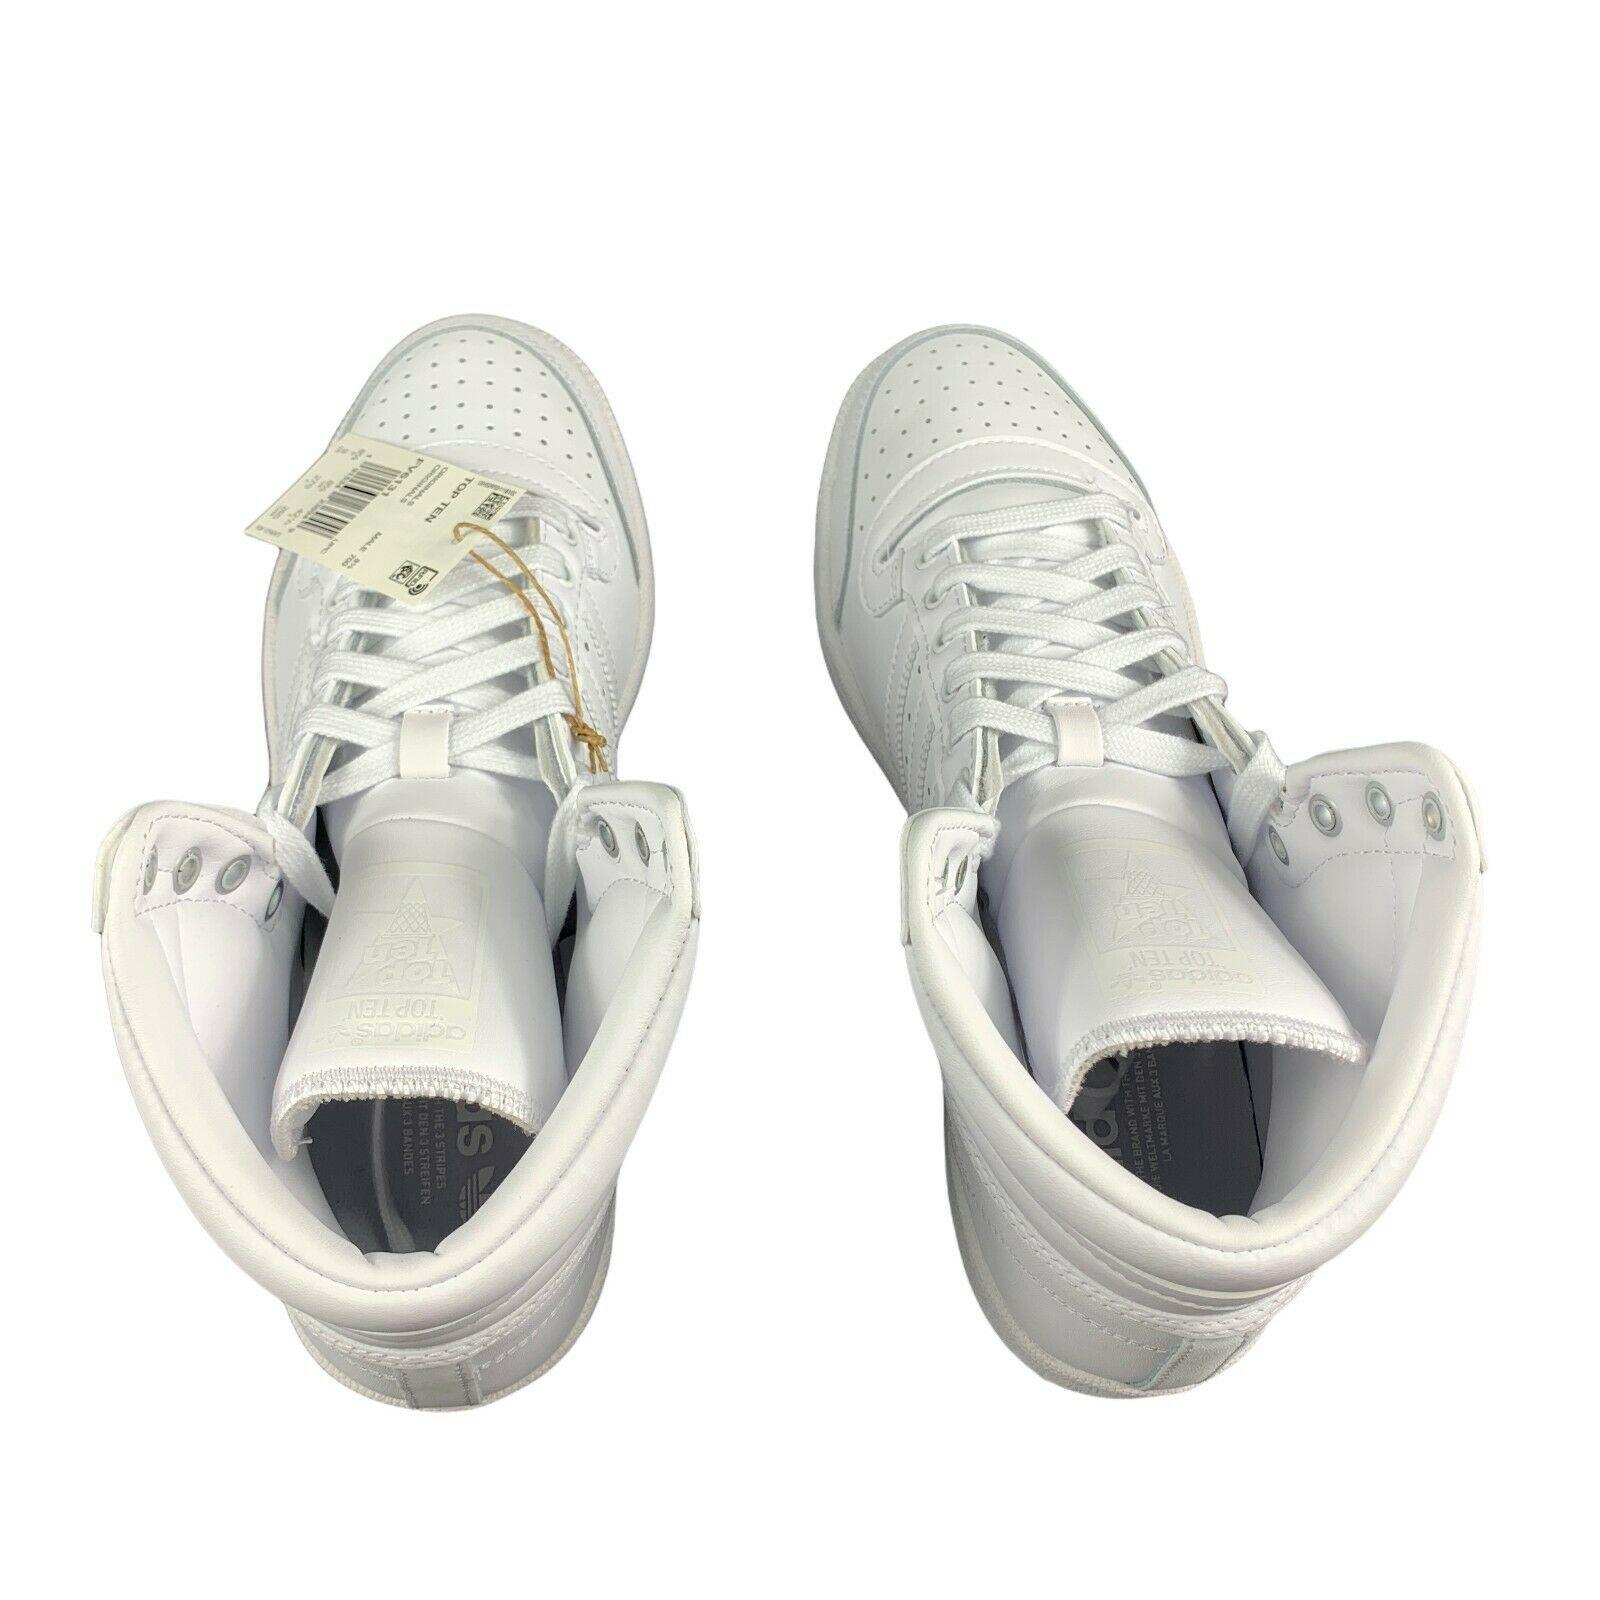 Adidas Originals Mens Top Ten HI Shoes Size 9 Triple White FV6131